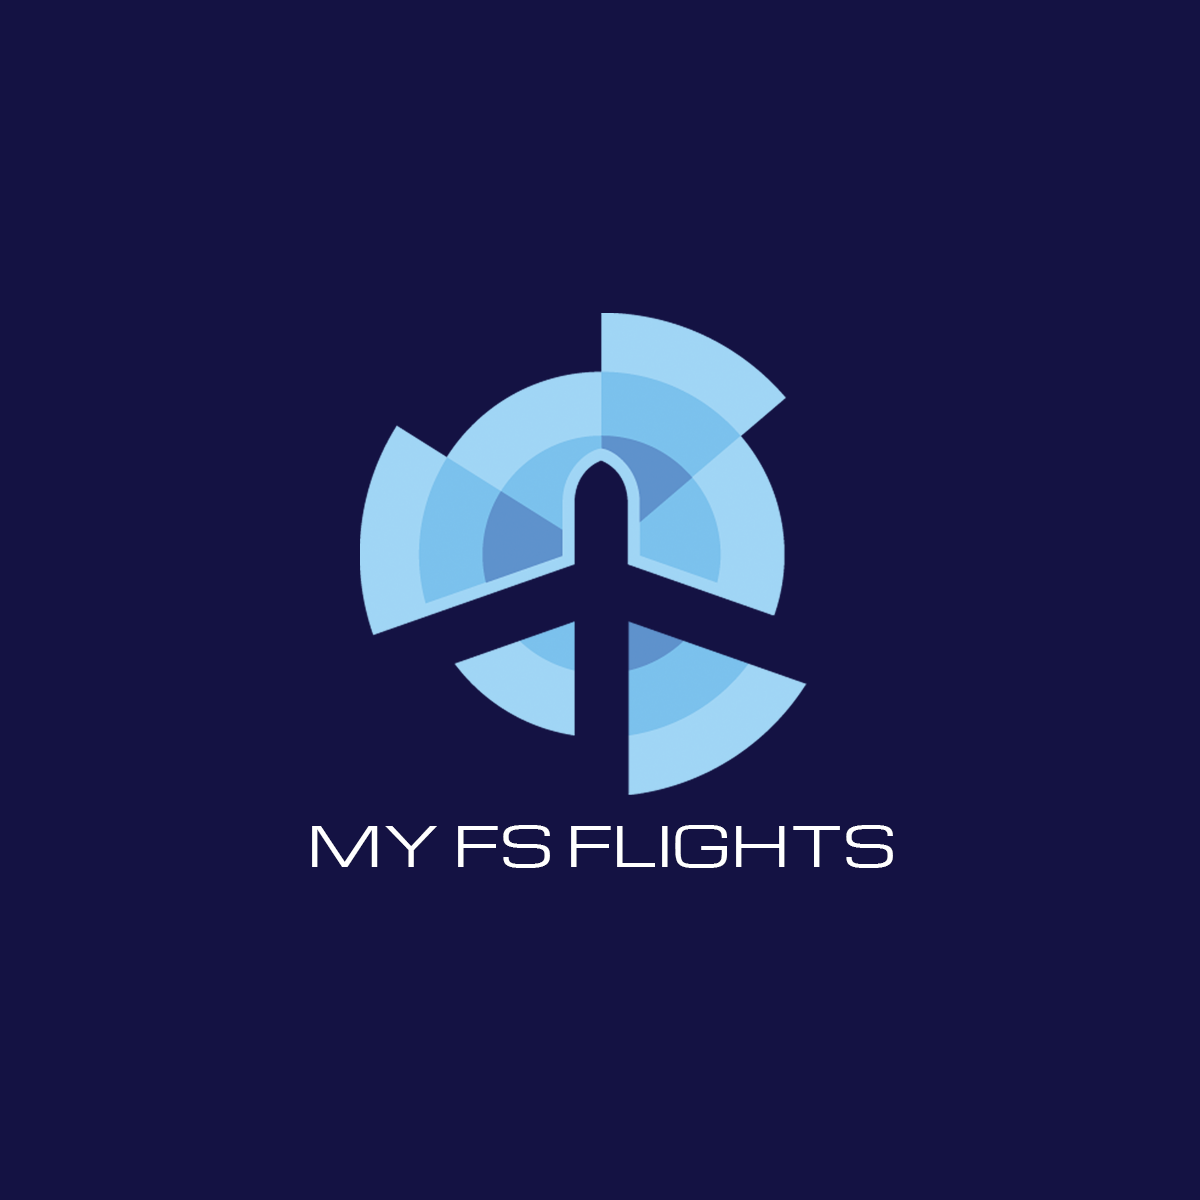 My FS Flights logo.